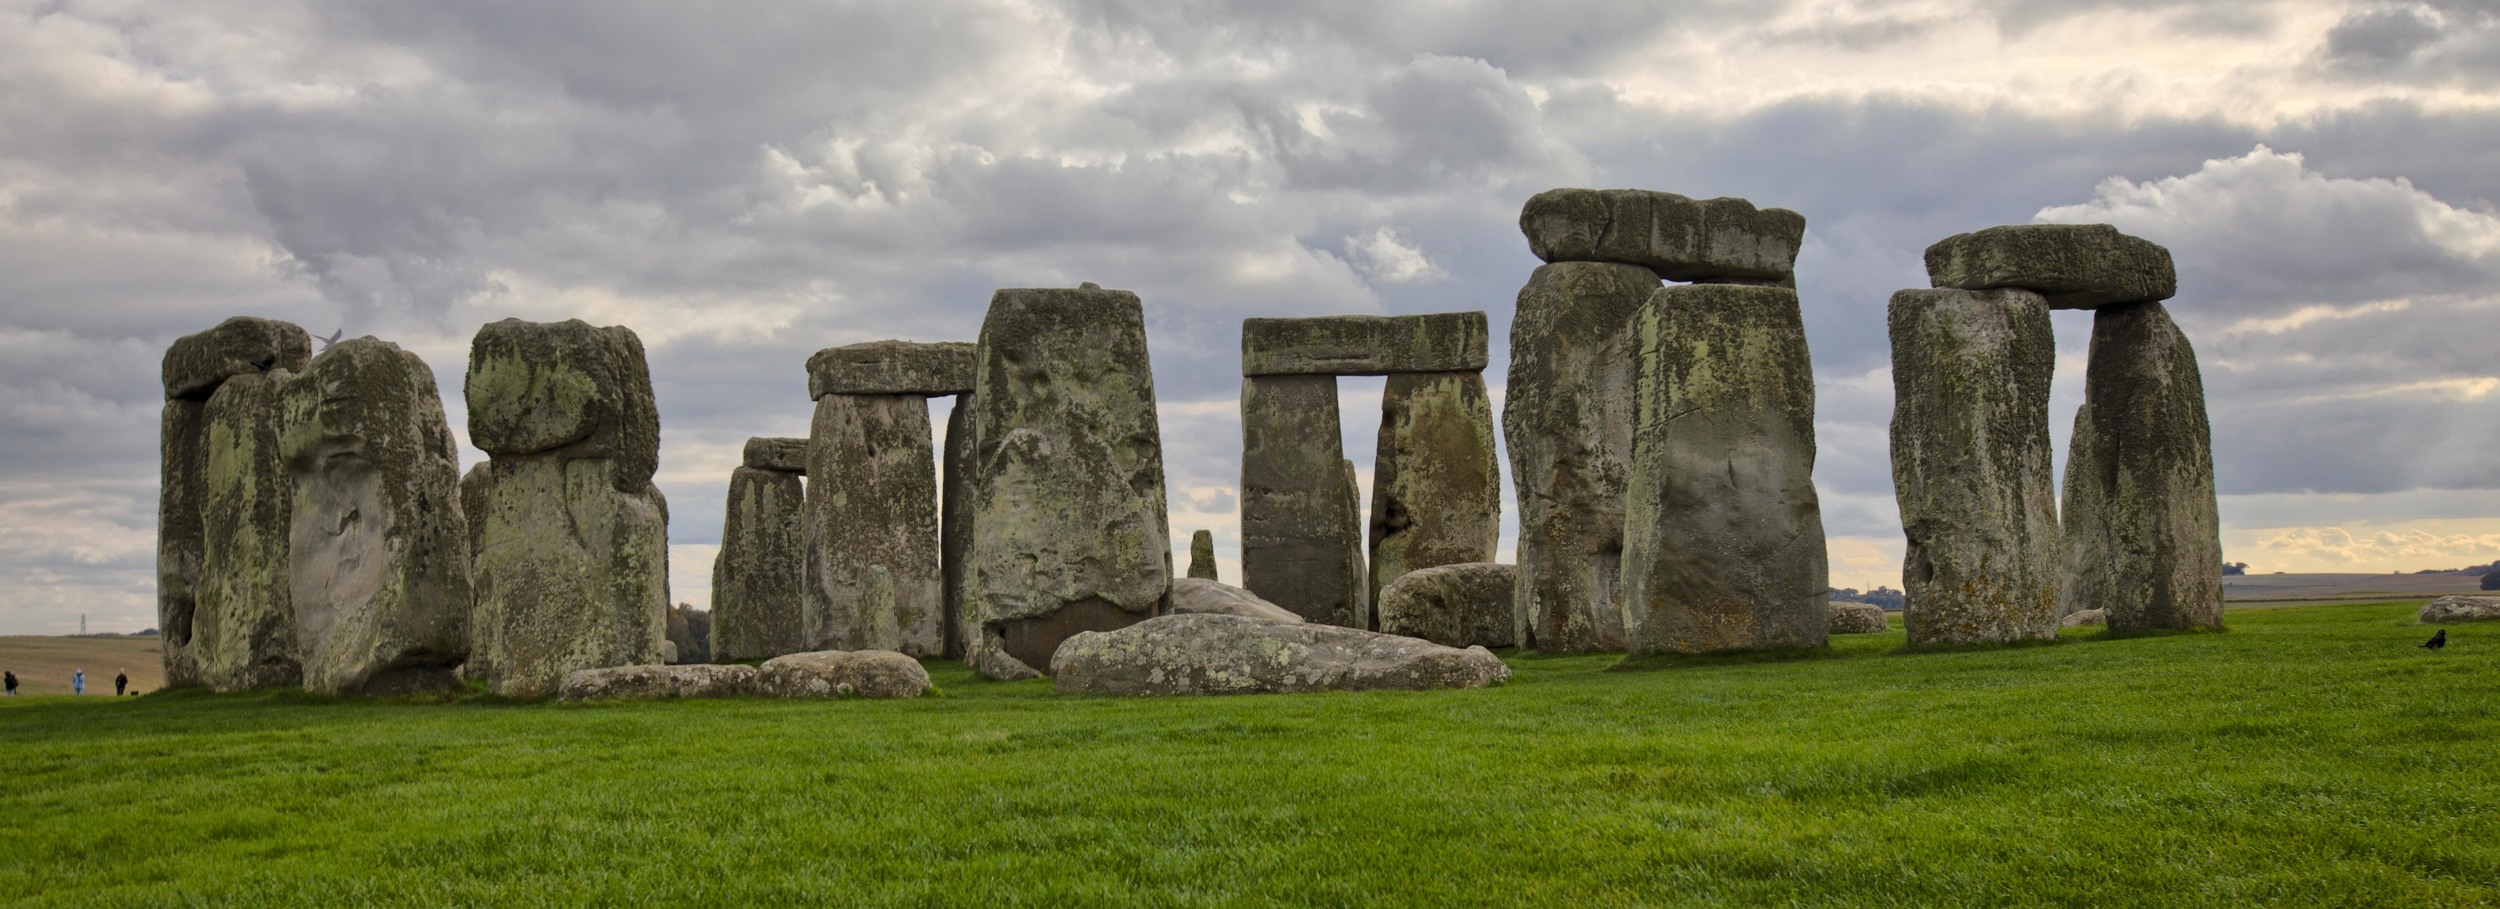 Stonehenge-HDR-1.jpg